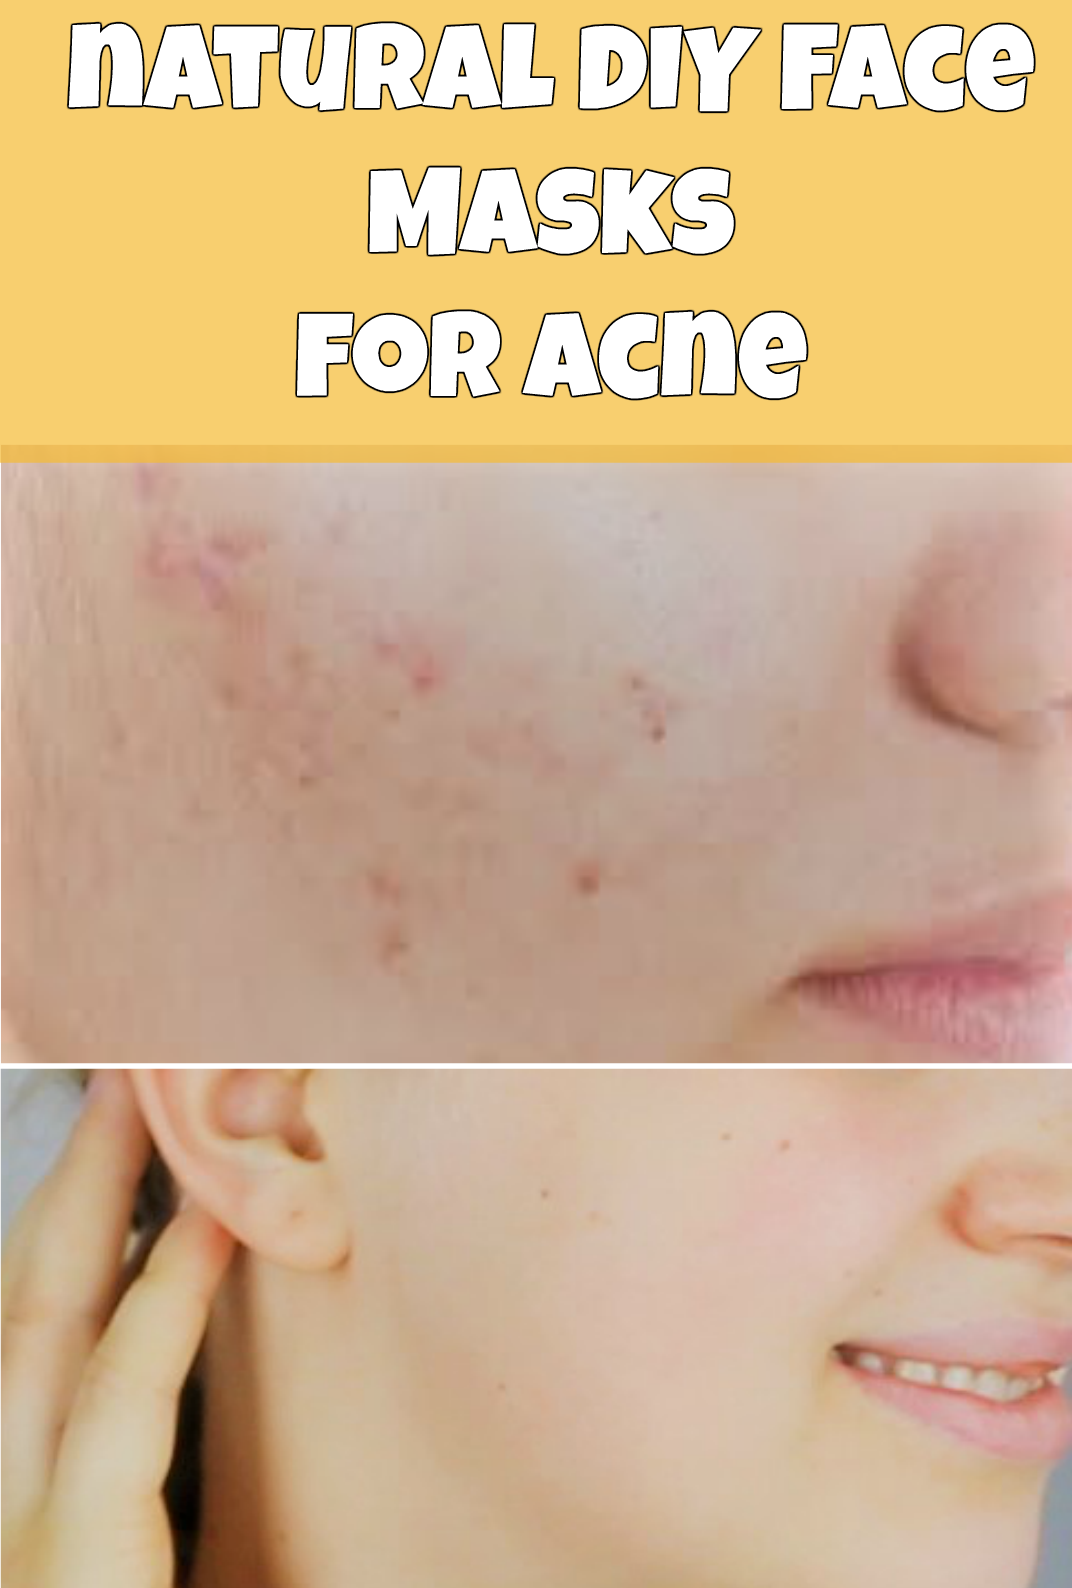 Homemade facial mask for acne prone skin